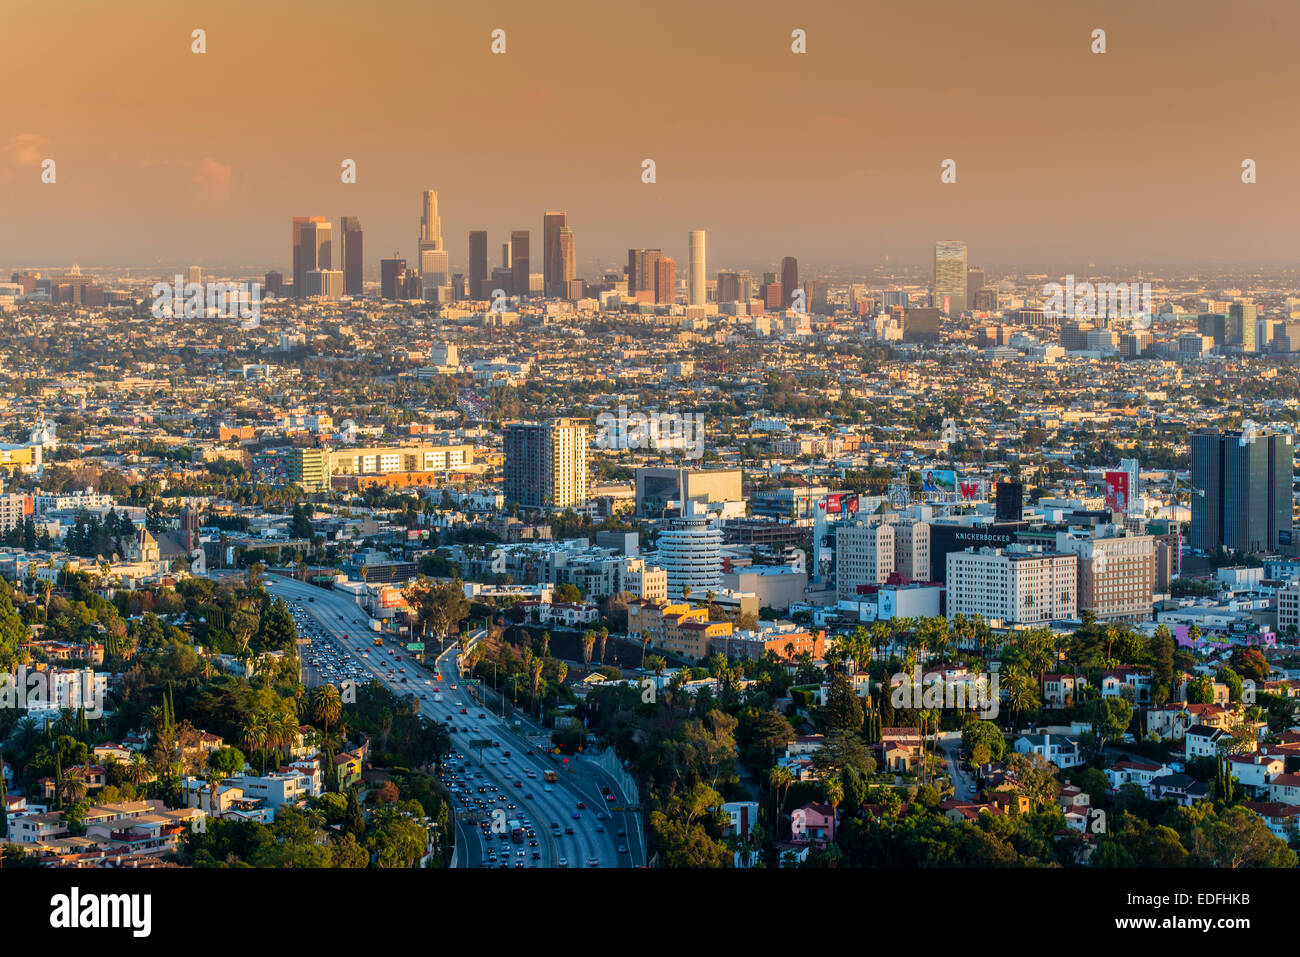 Ciity skyline at sunset, Los Angeles, California, USA Stock Photo